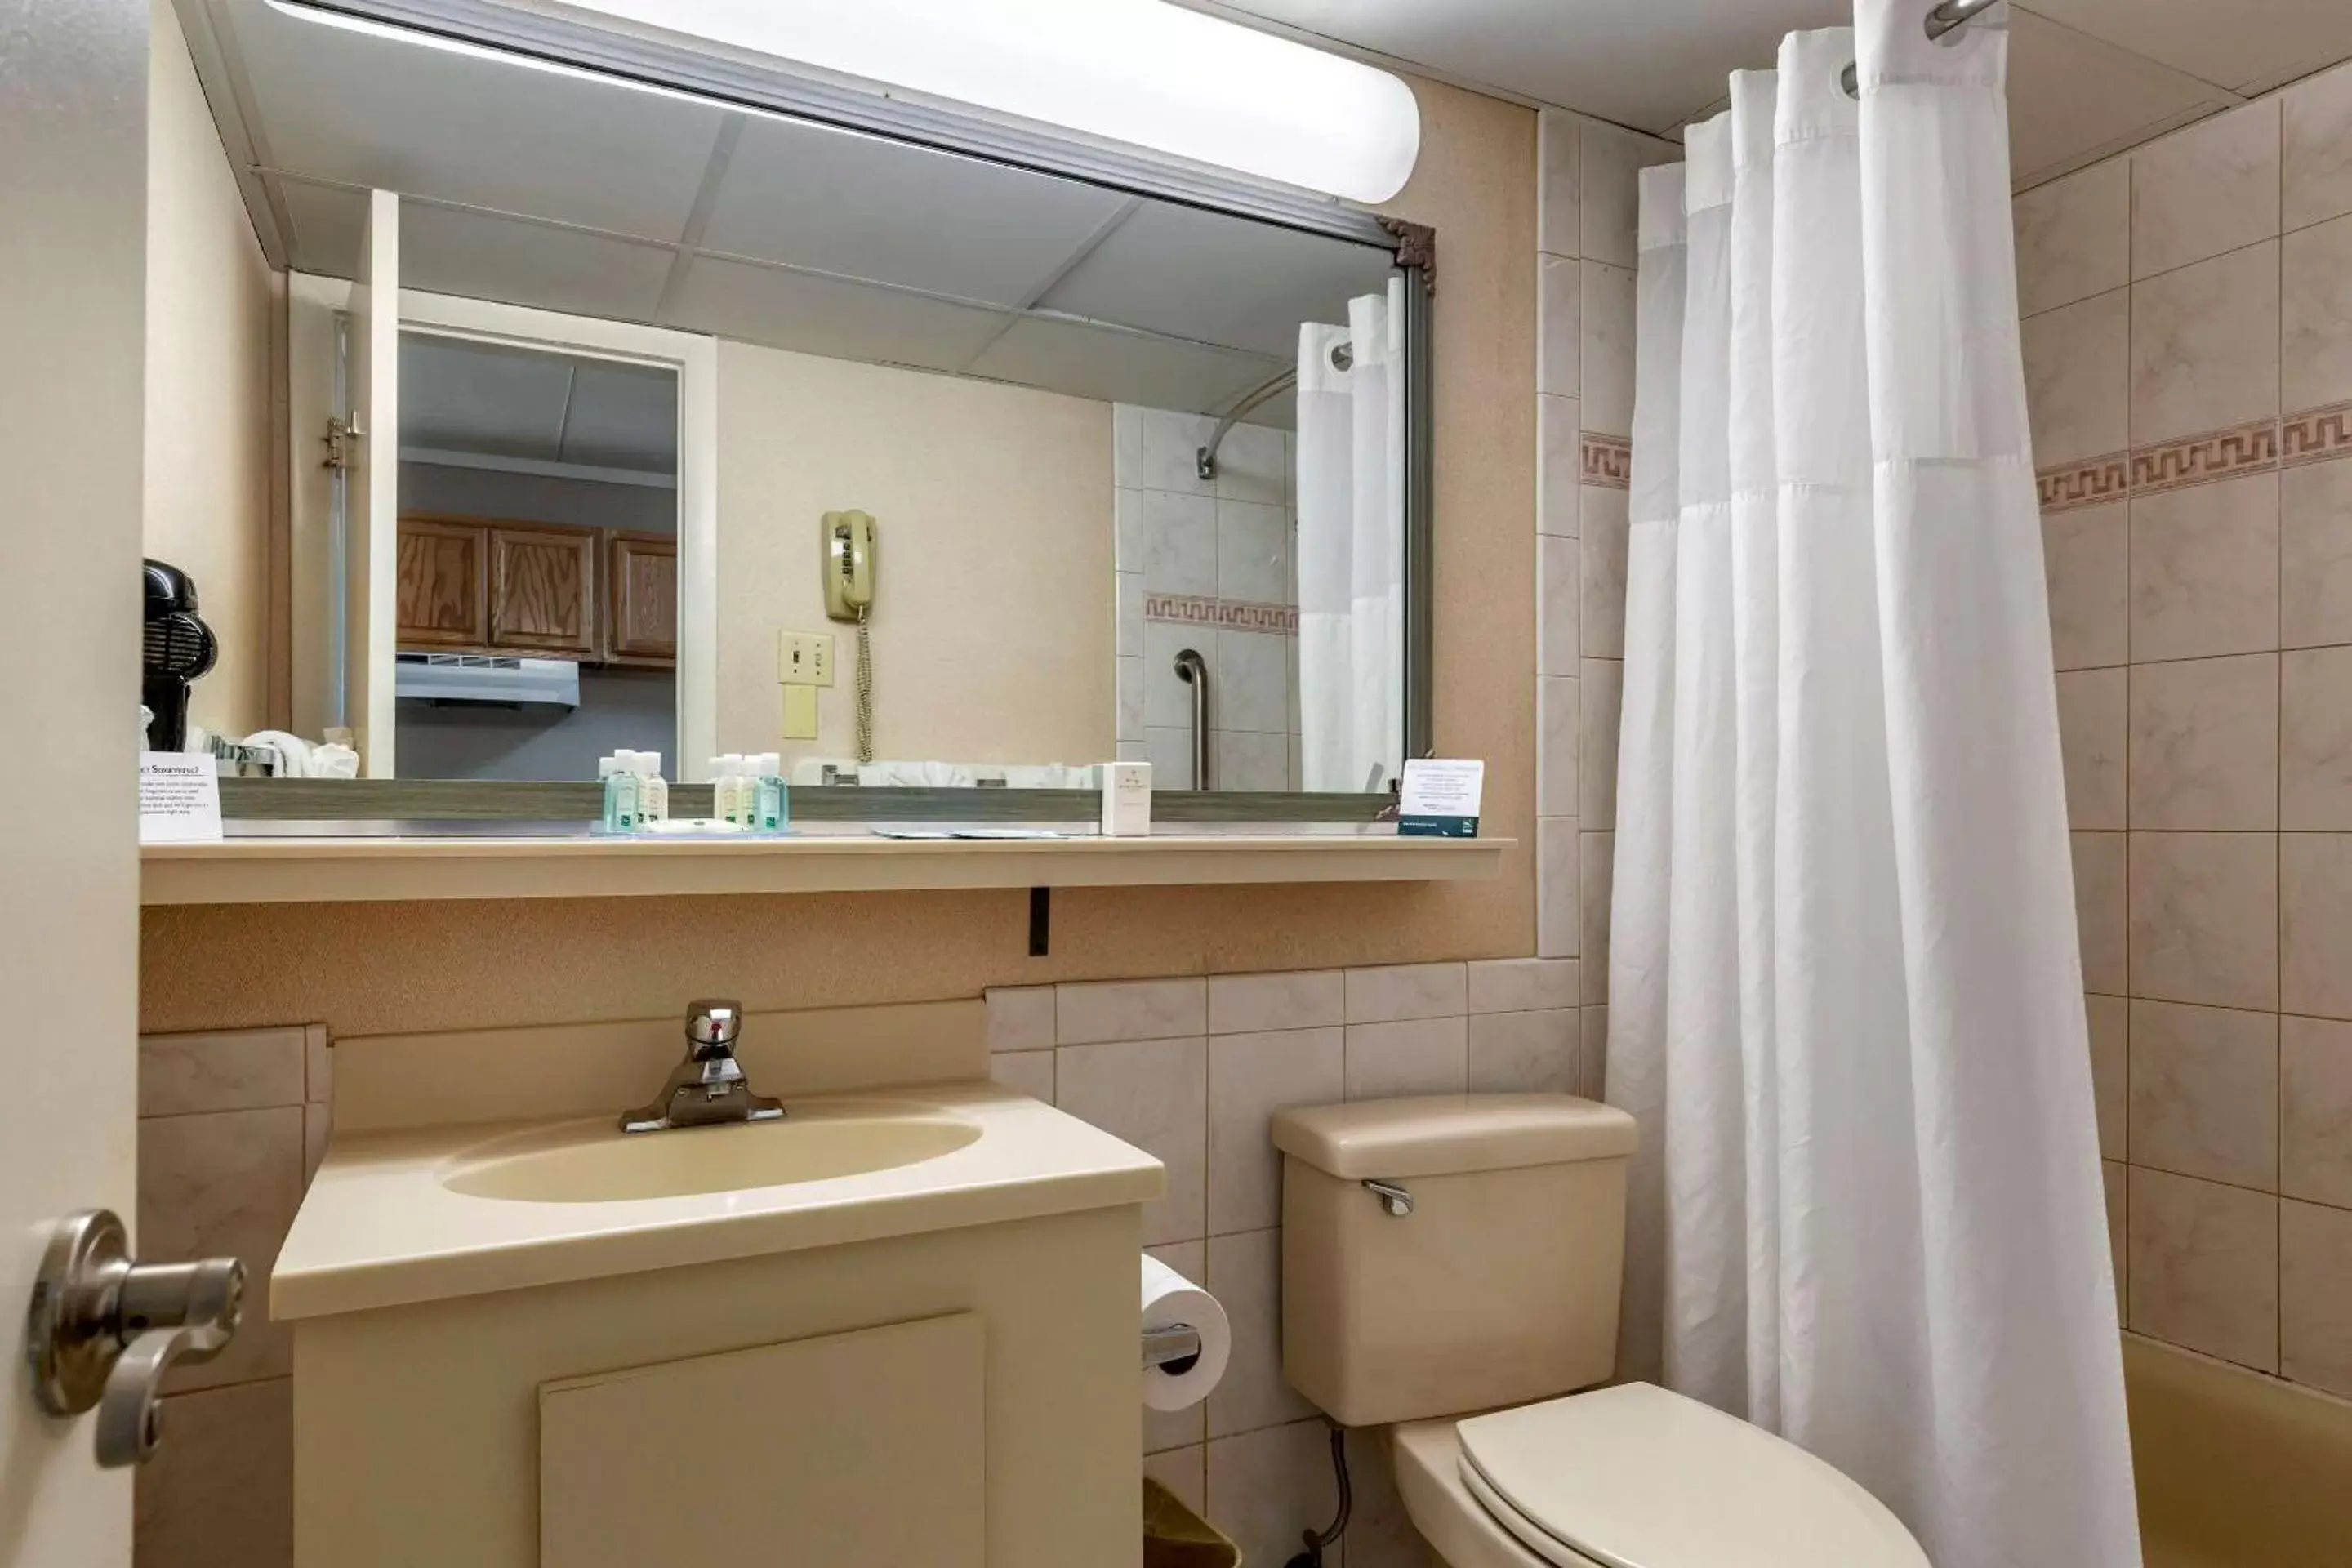 Photo of the whole room, Bathroom in Quality Inn Boardwalk